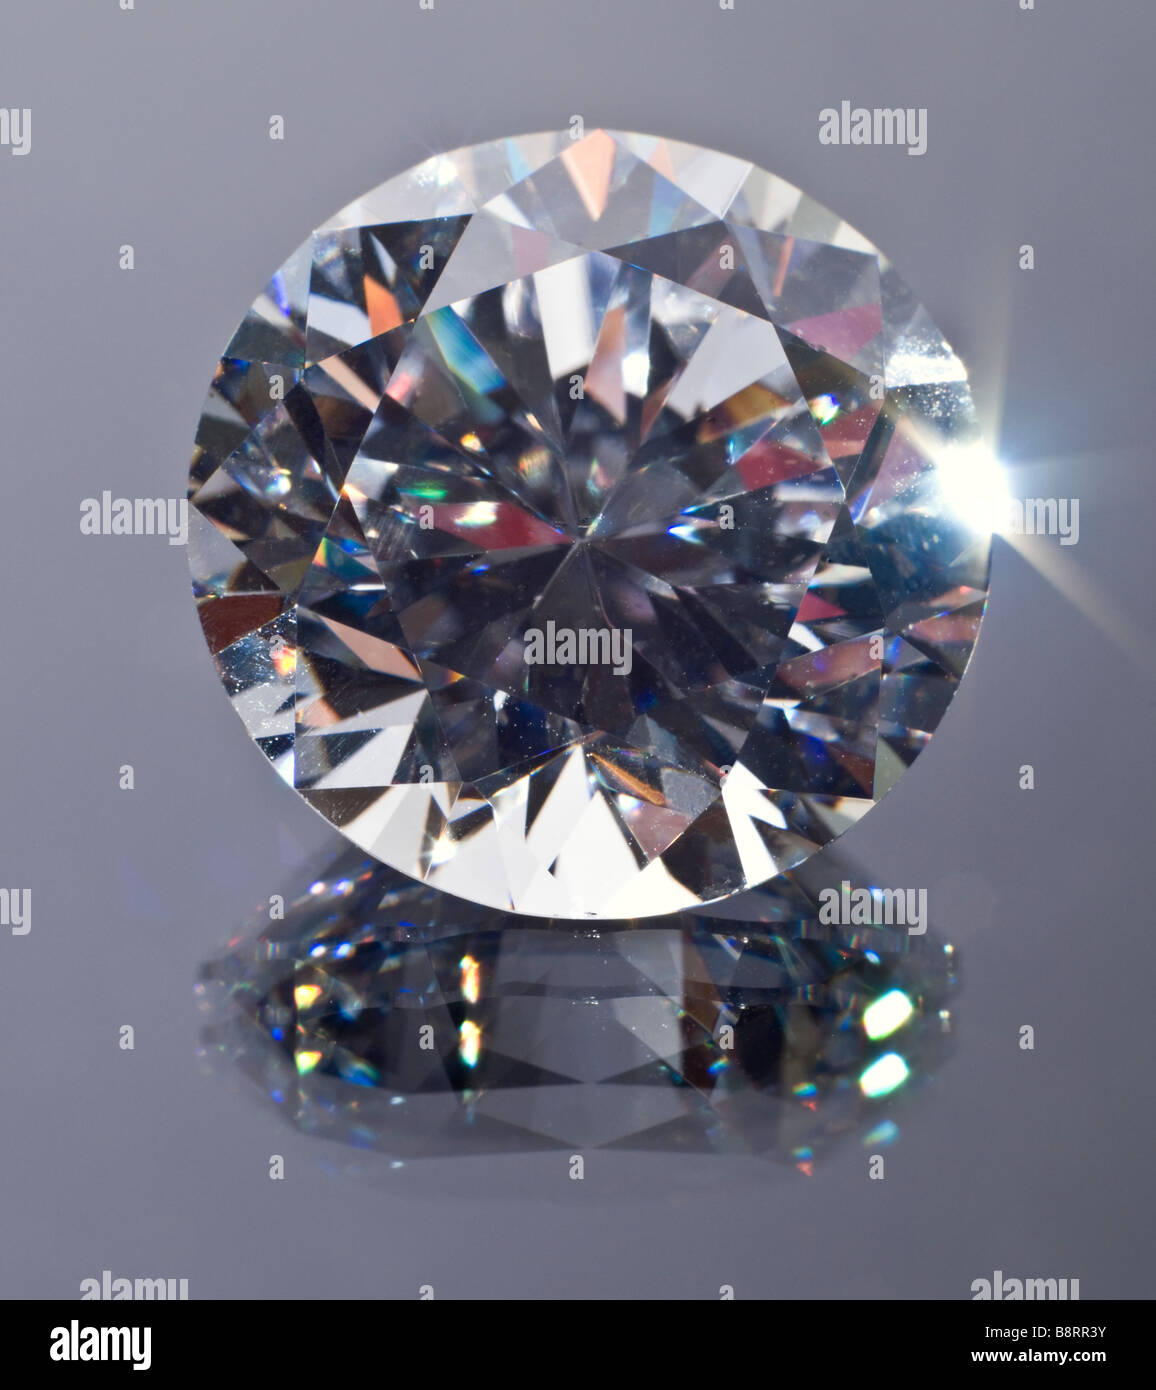 Round Cut Diamond (synthetic - cubic zirconia) Stock Photo